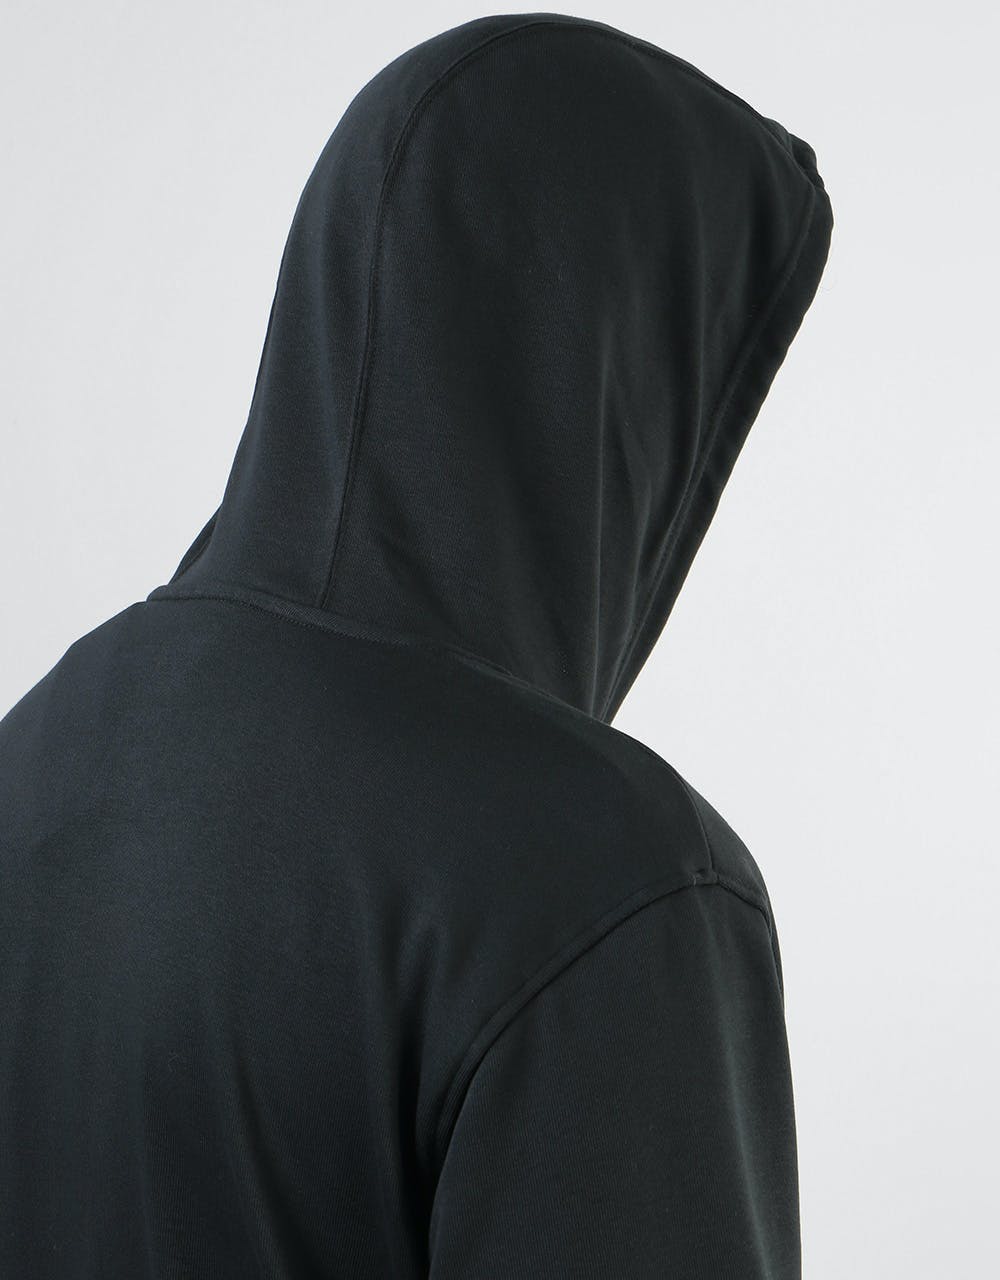 Adidas Clima 3.0 Pullover Hoodie - Black/Black